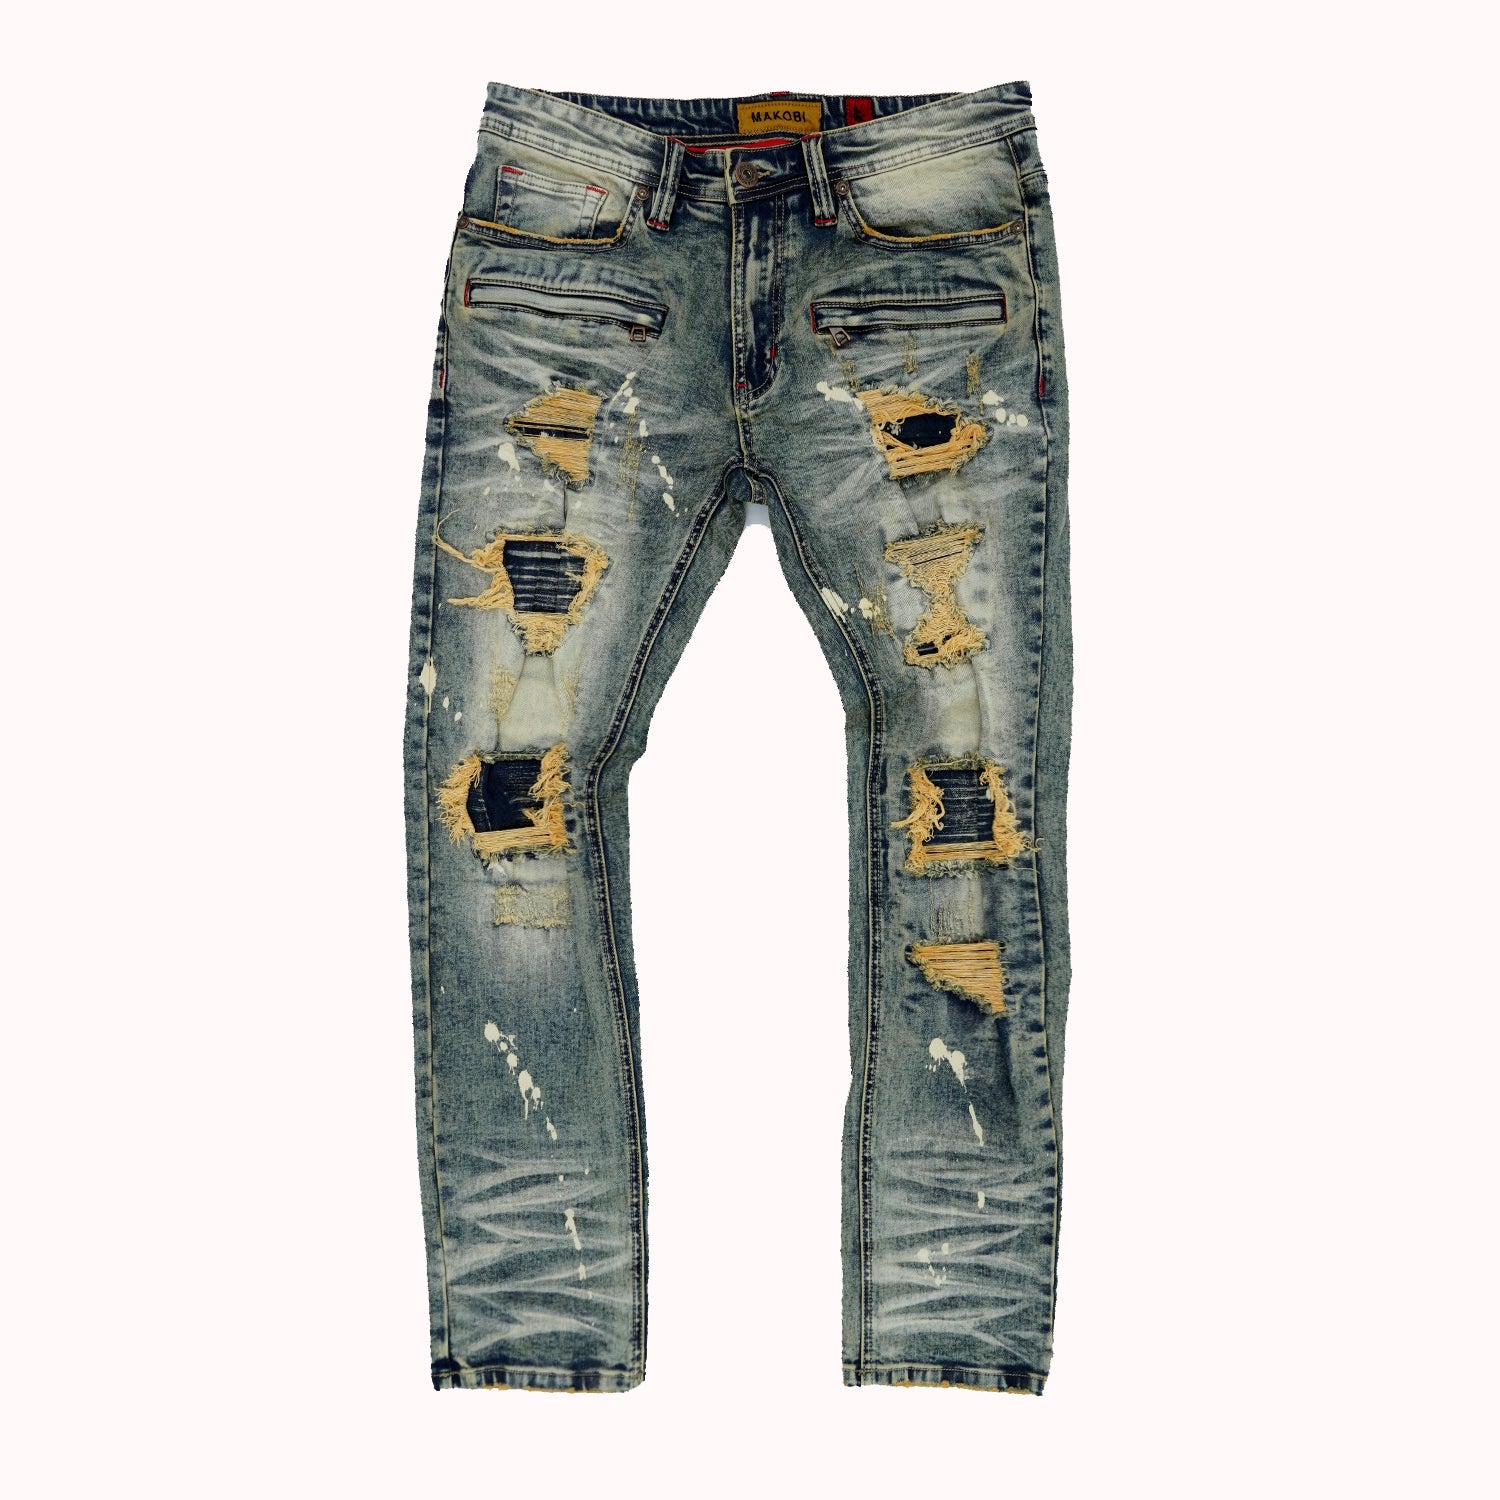 M1944 Pipa Shredded Jeans - Dirt Wash